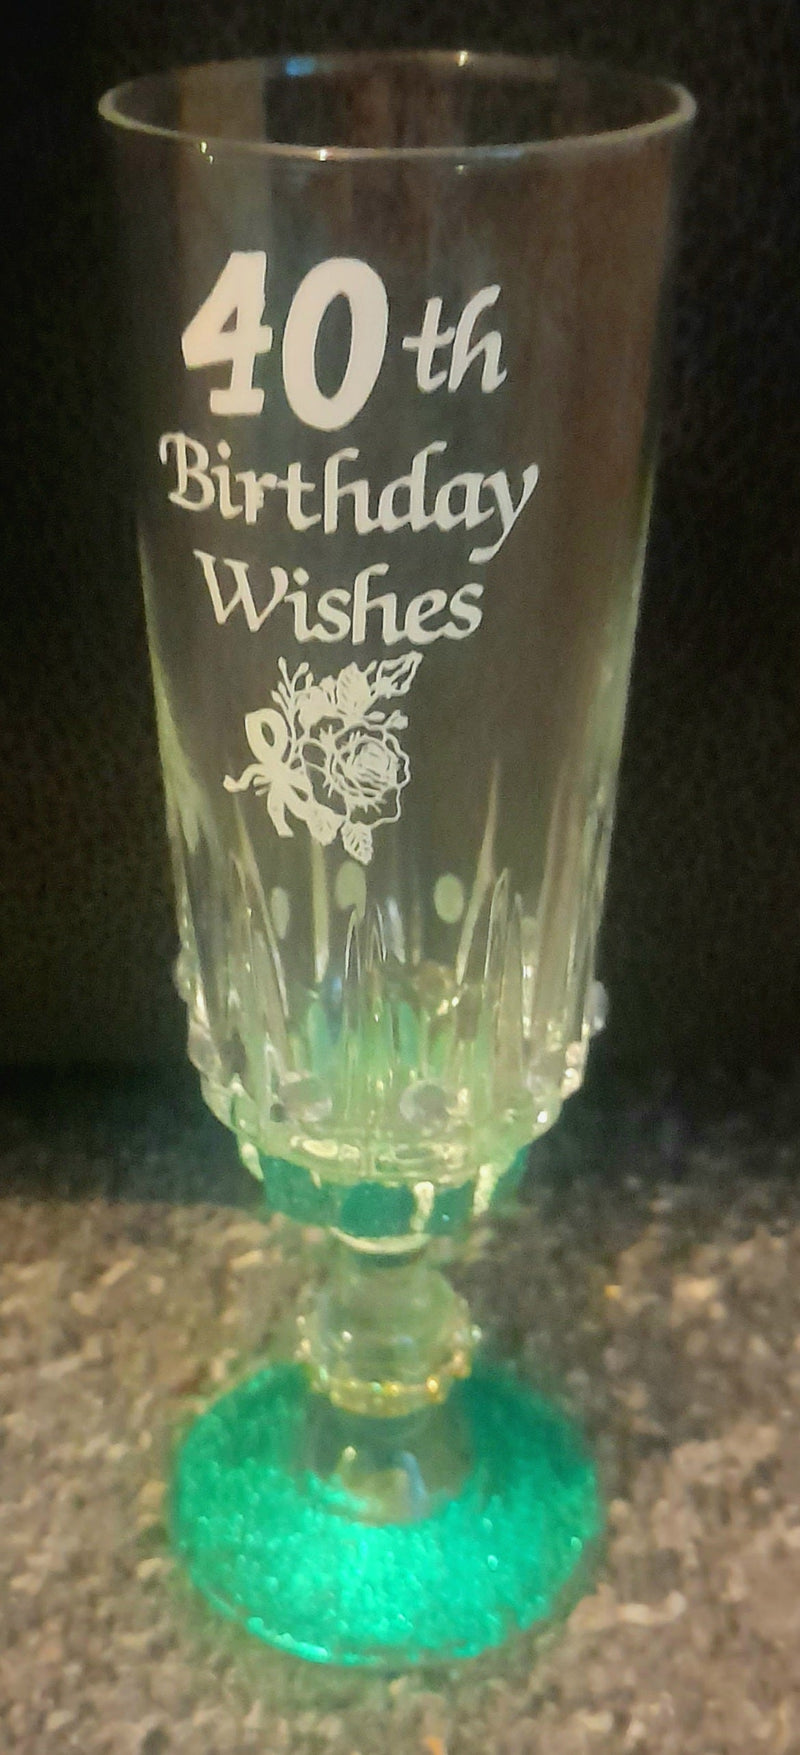 Birthday wishes glass